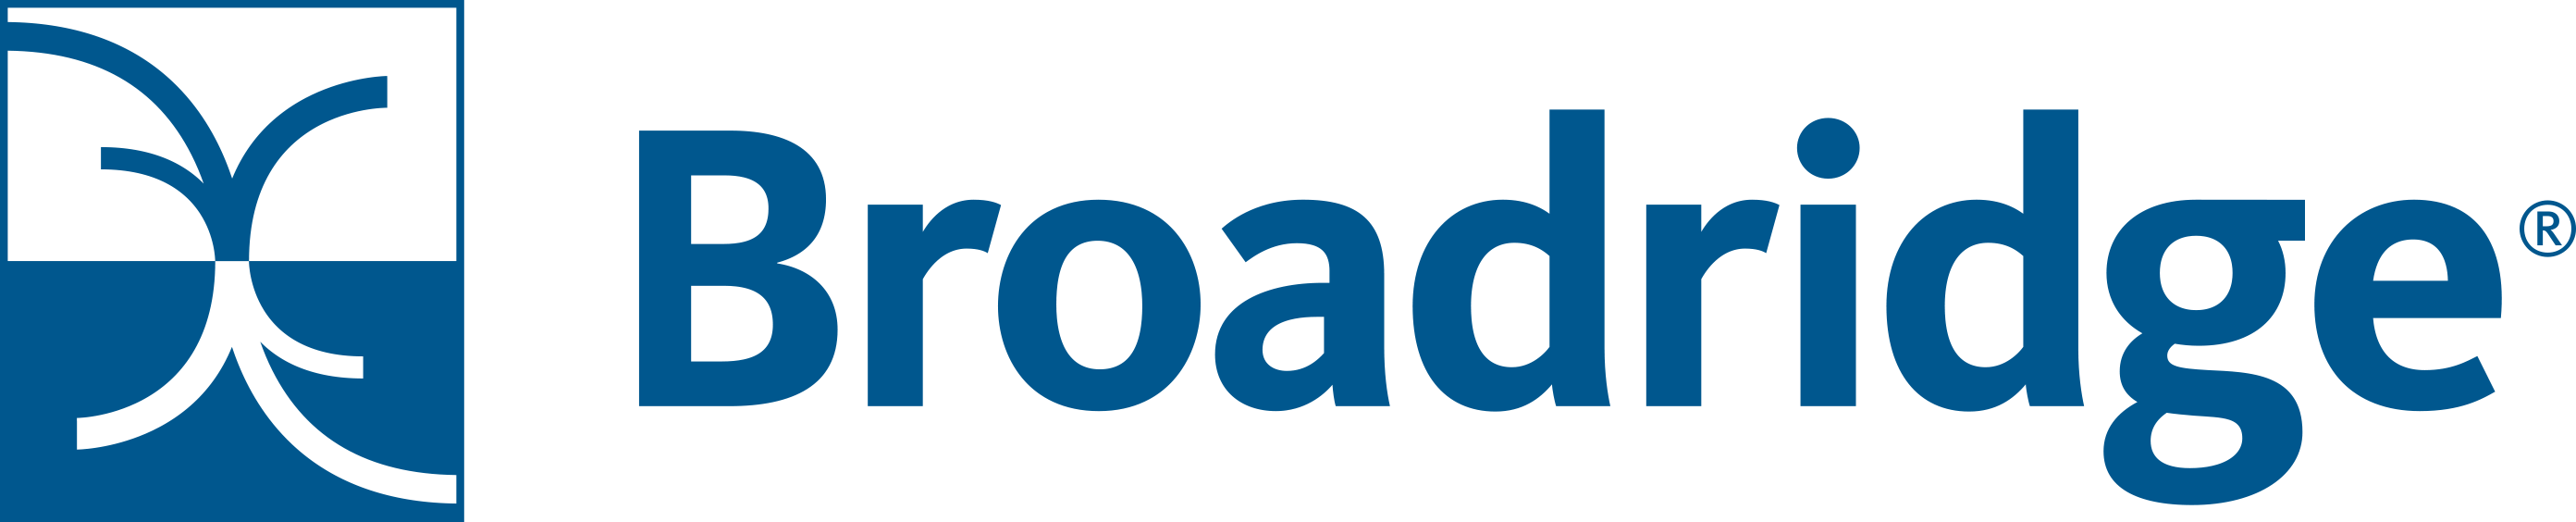 Customer-Broadridge-Logo